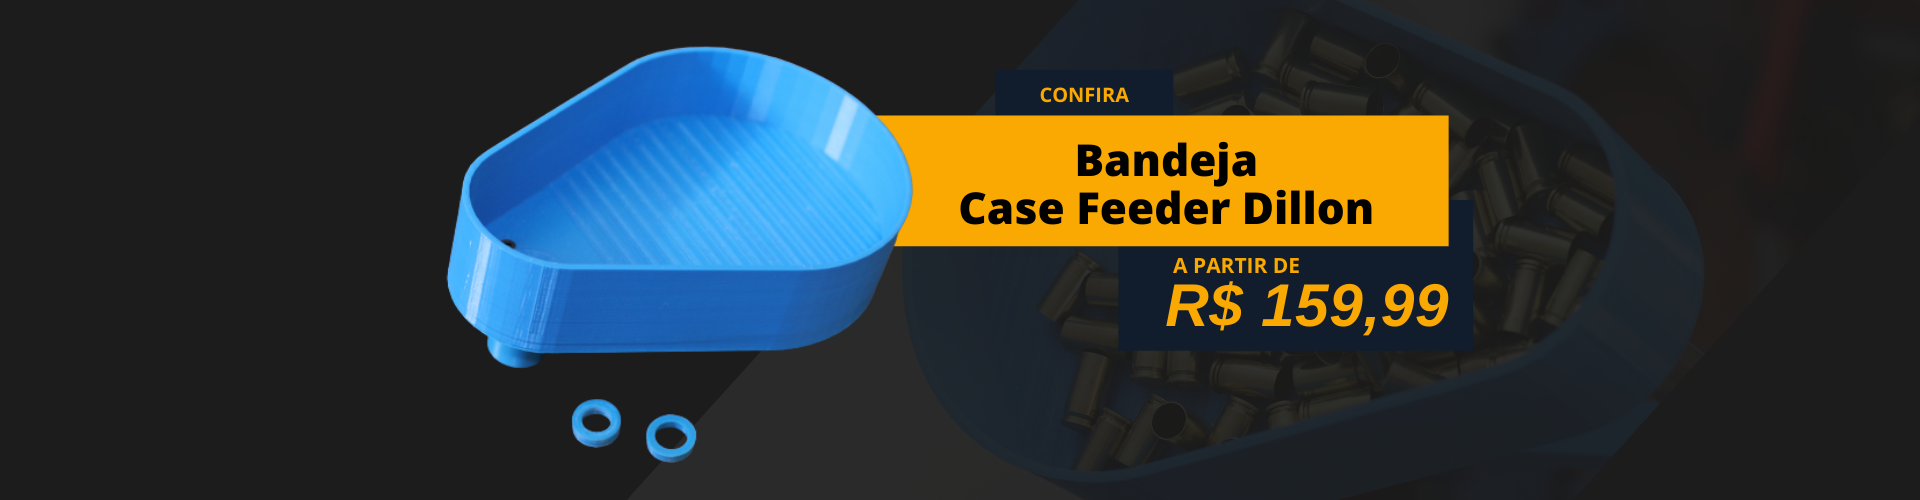 banner-4 bandeja case feeder dillon